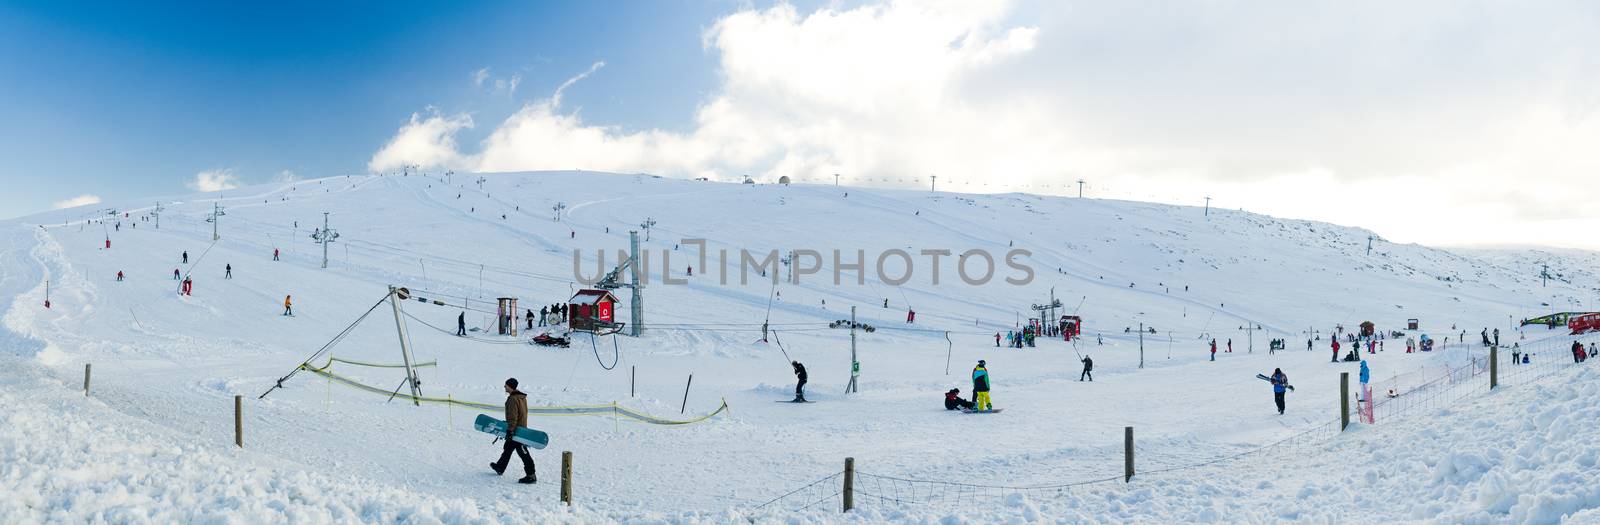 Vodafone Ski Resort at Serra da Estrela, Portugal by homydesign